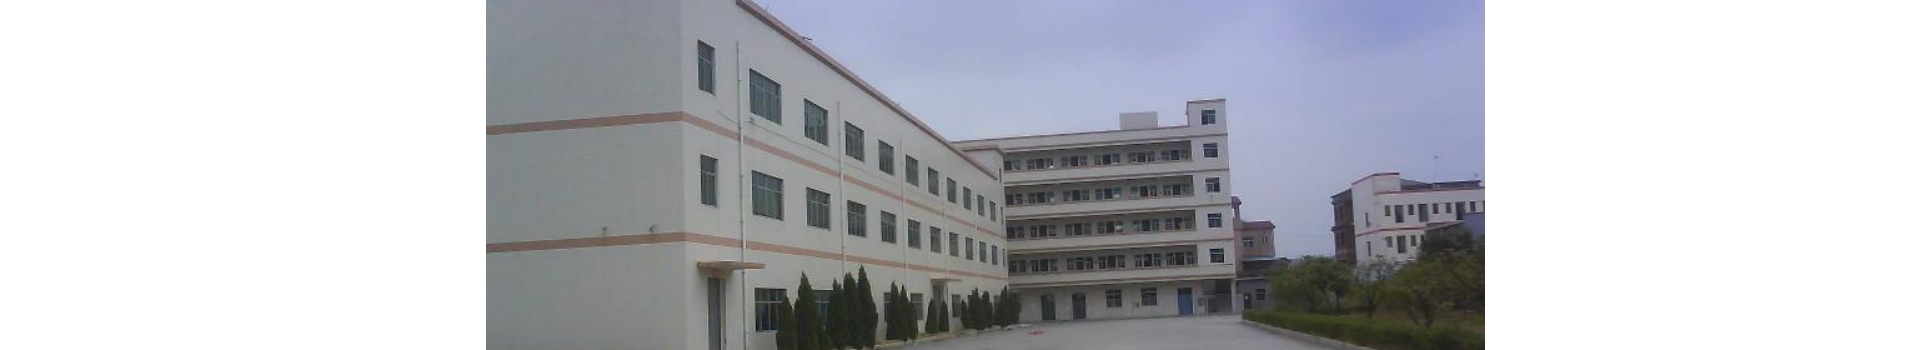 Dongguan LIXING PLASTIC & Metal Products Co. , Ltd.